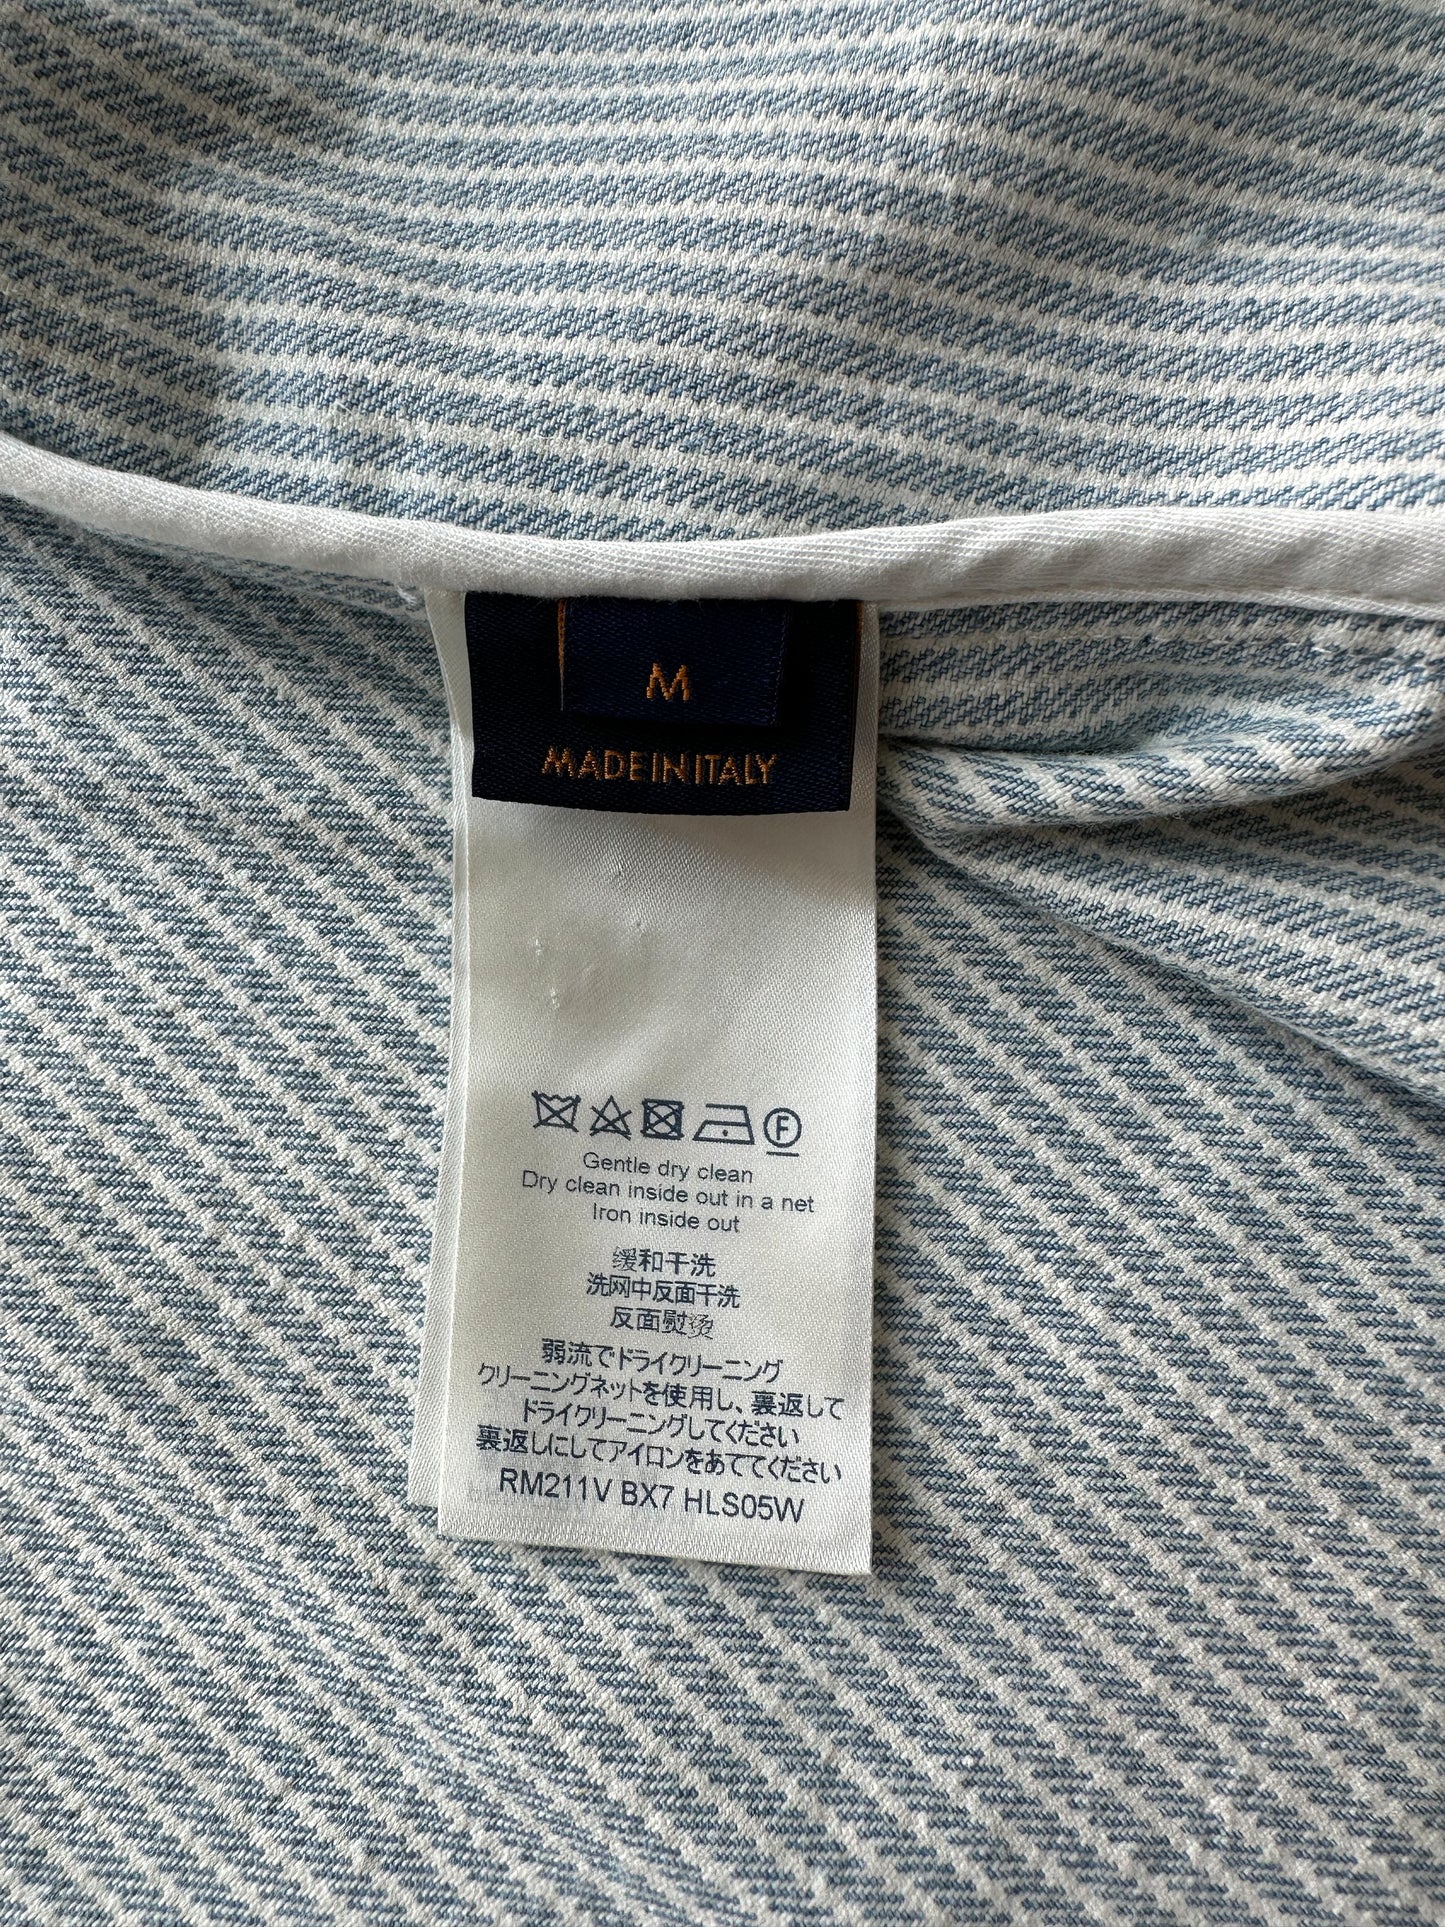 Louis Vuitton Blue & White Watercolor Monogram Polo shirt – Savonches